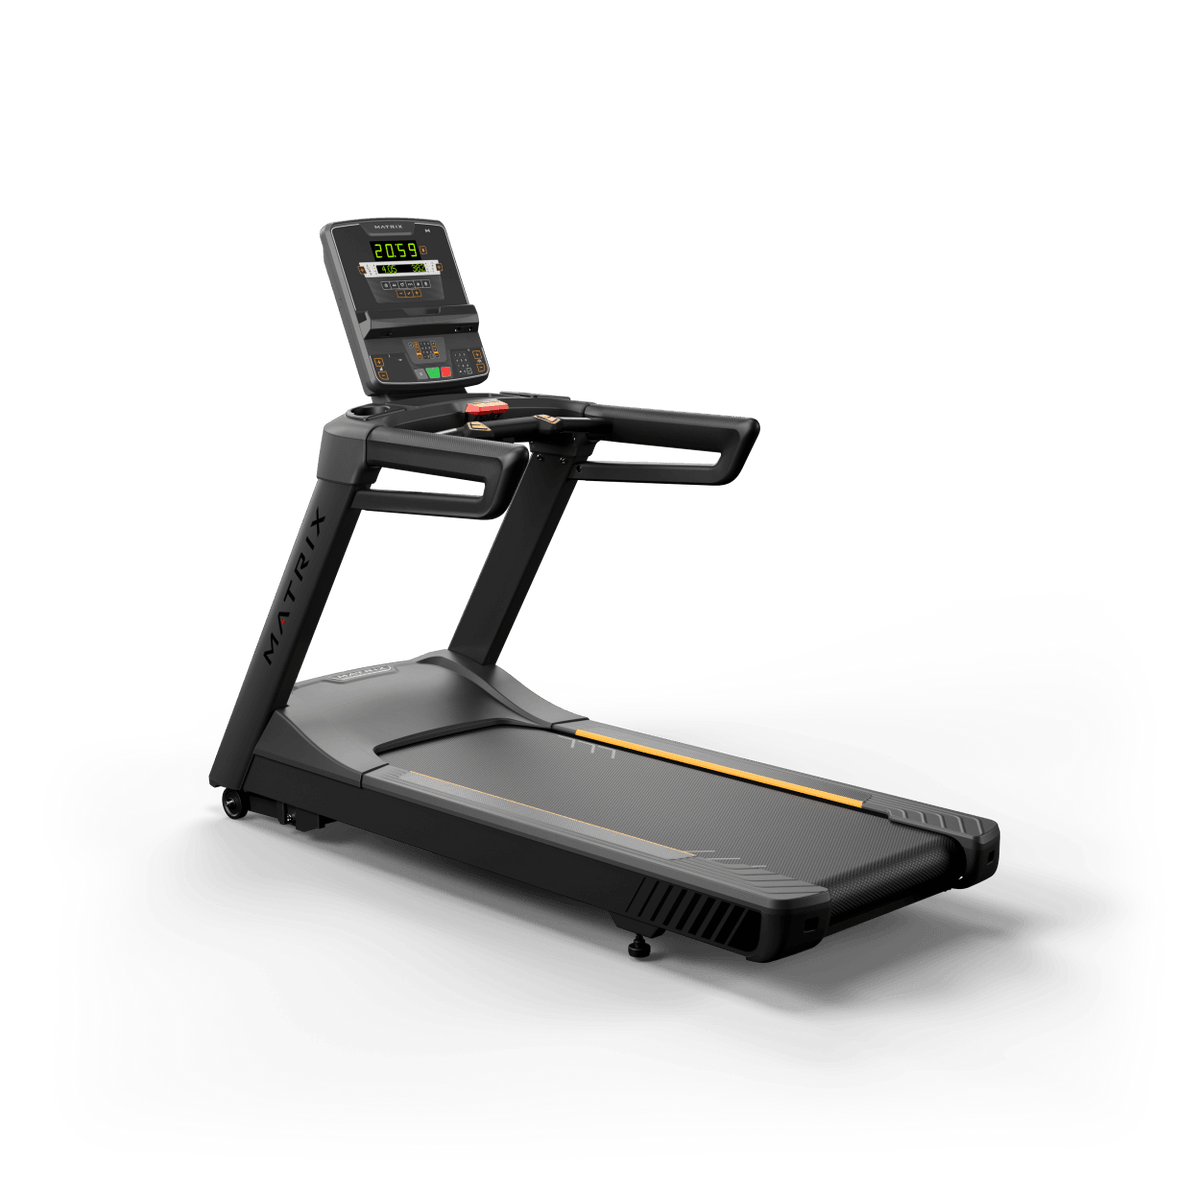 Endurance Treadmill